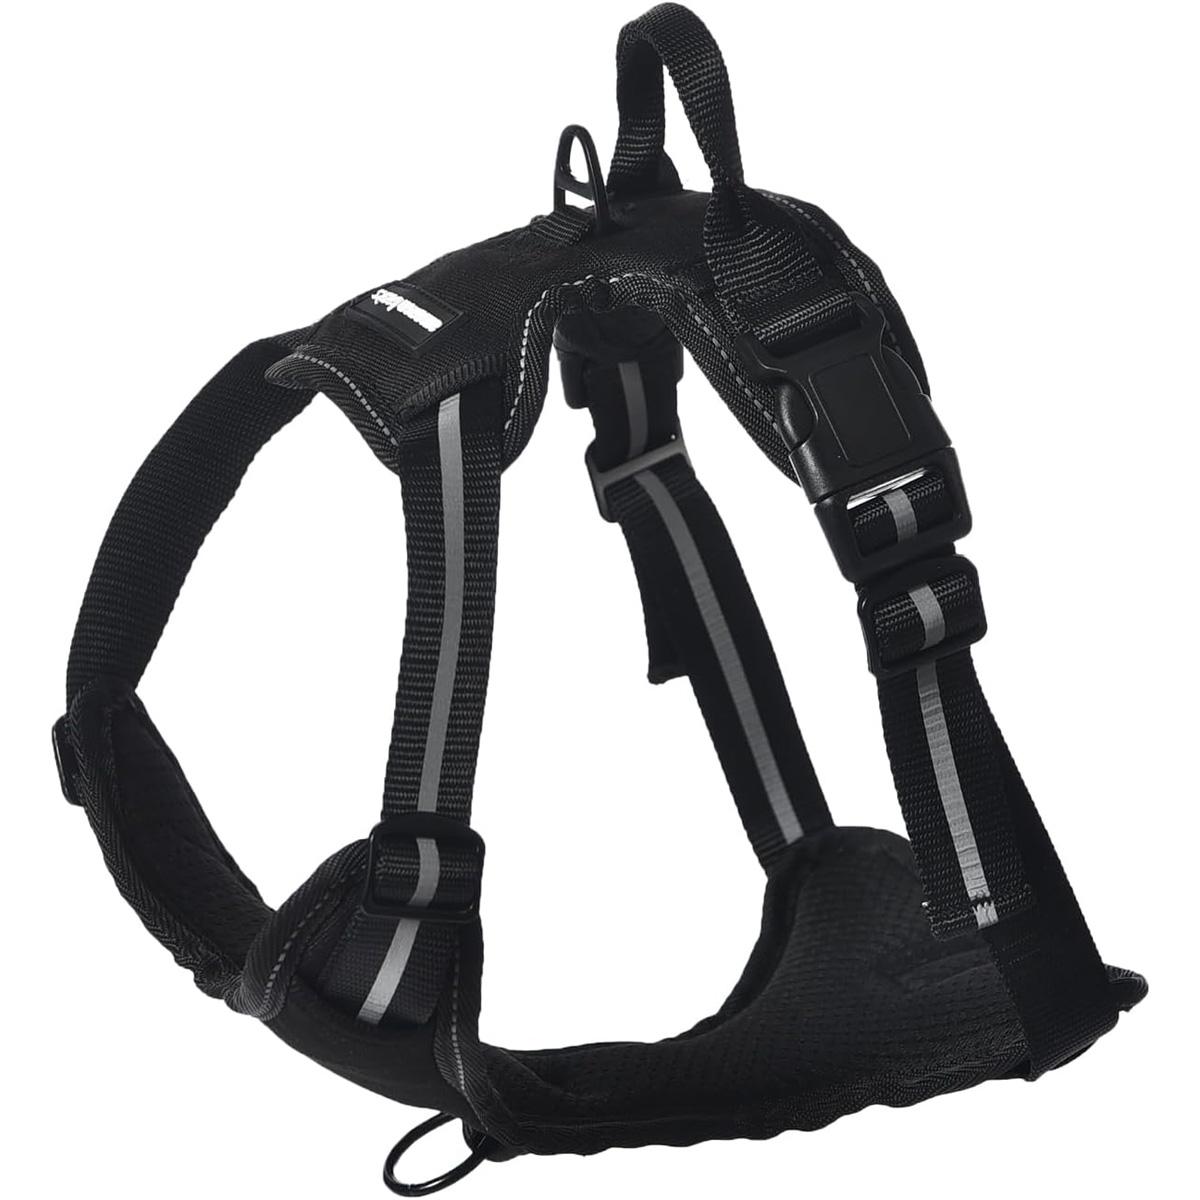 Amazon Basics No-Pull Adjustable Soft Padded Dog Vest Harness for $11.84